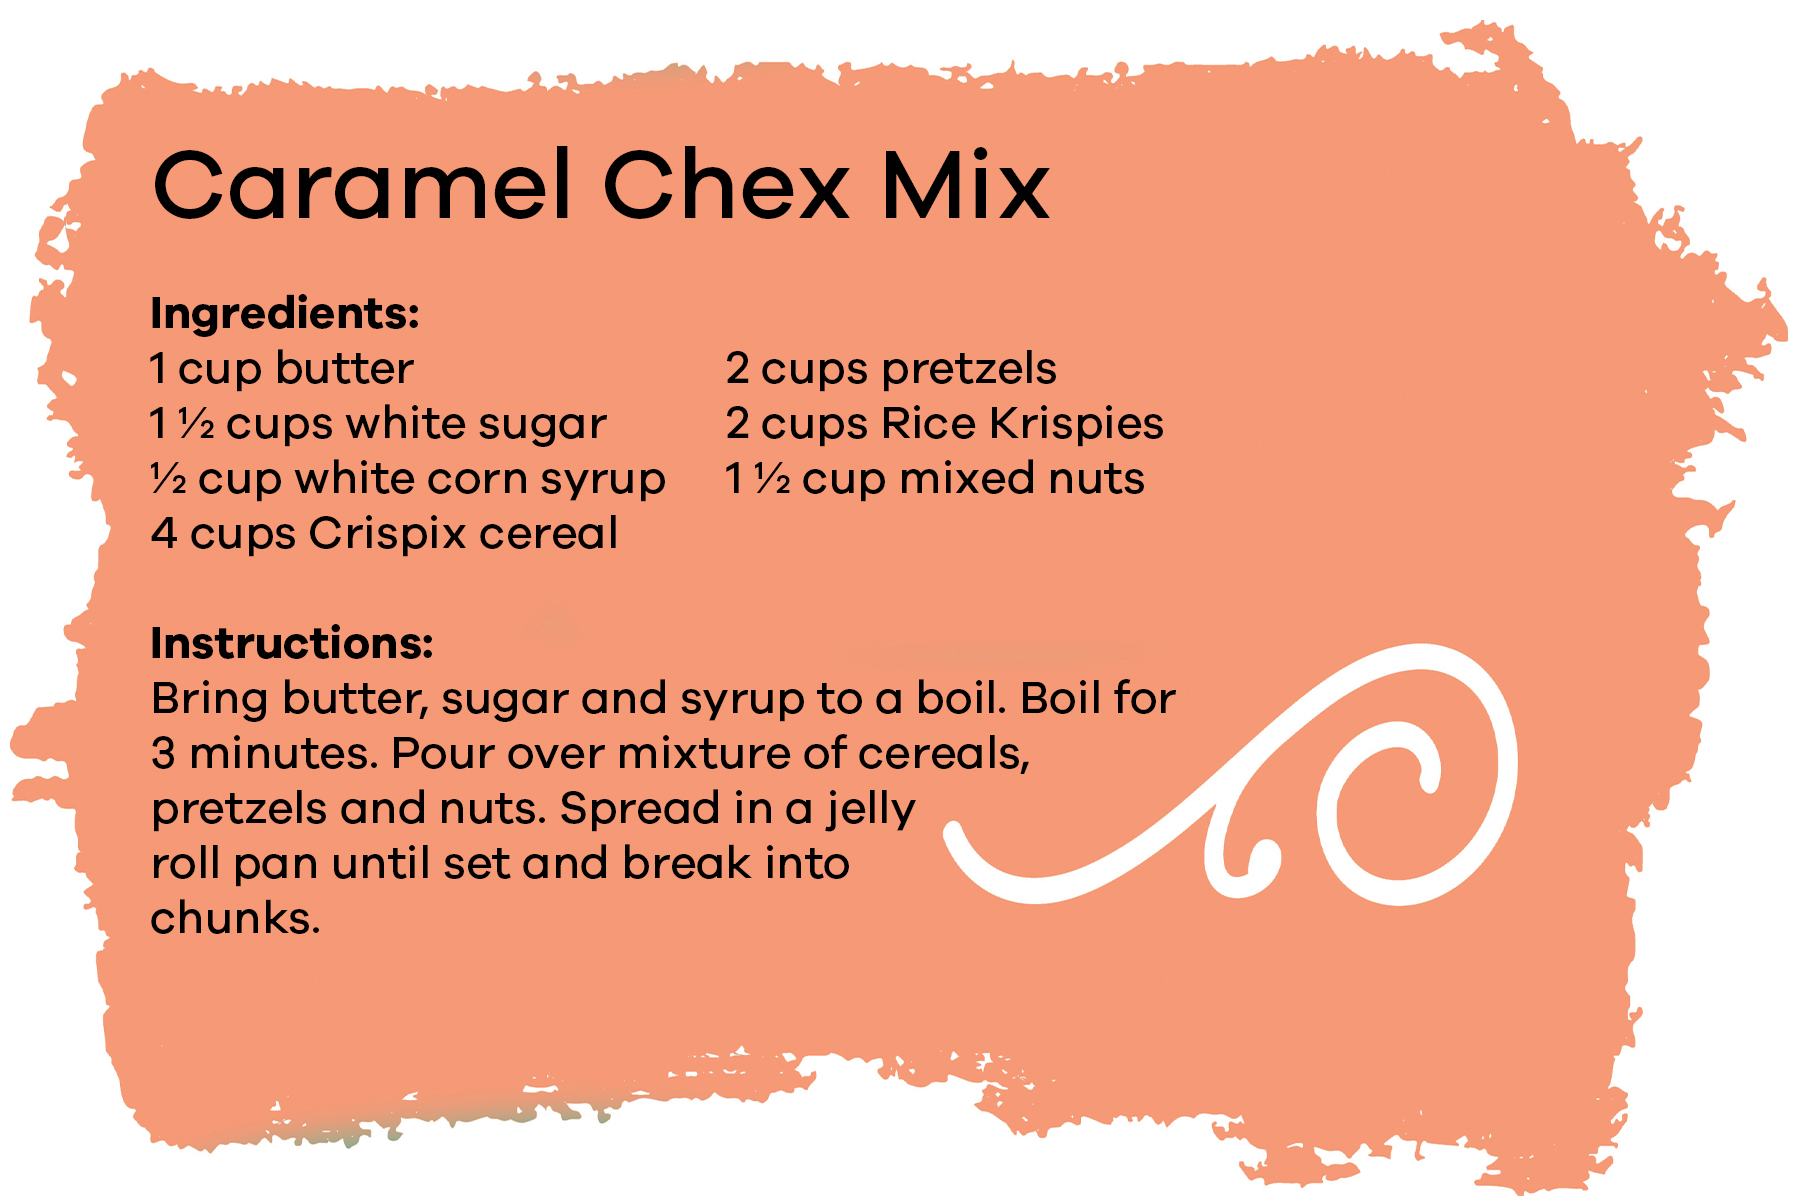 Caramel Chex Mix